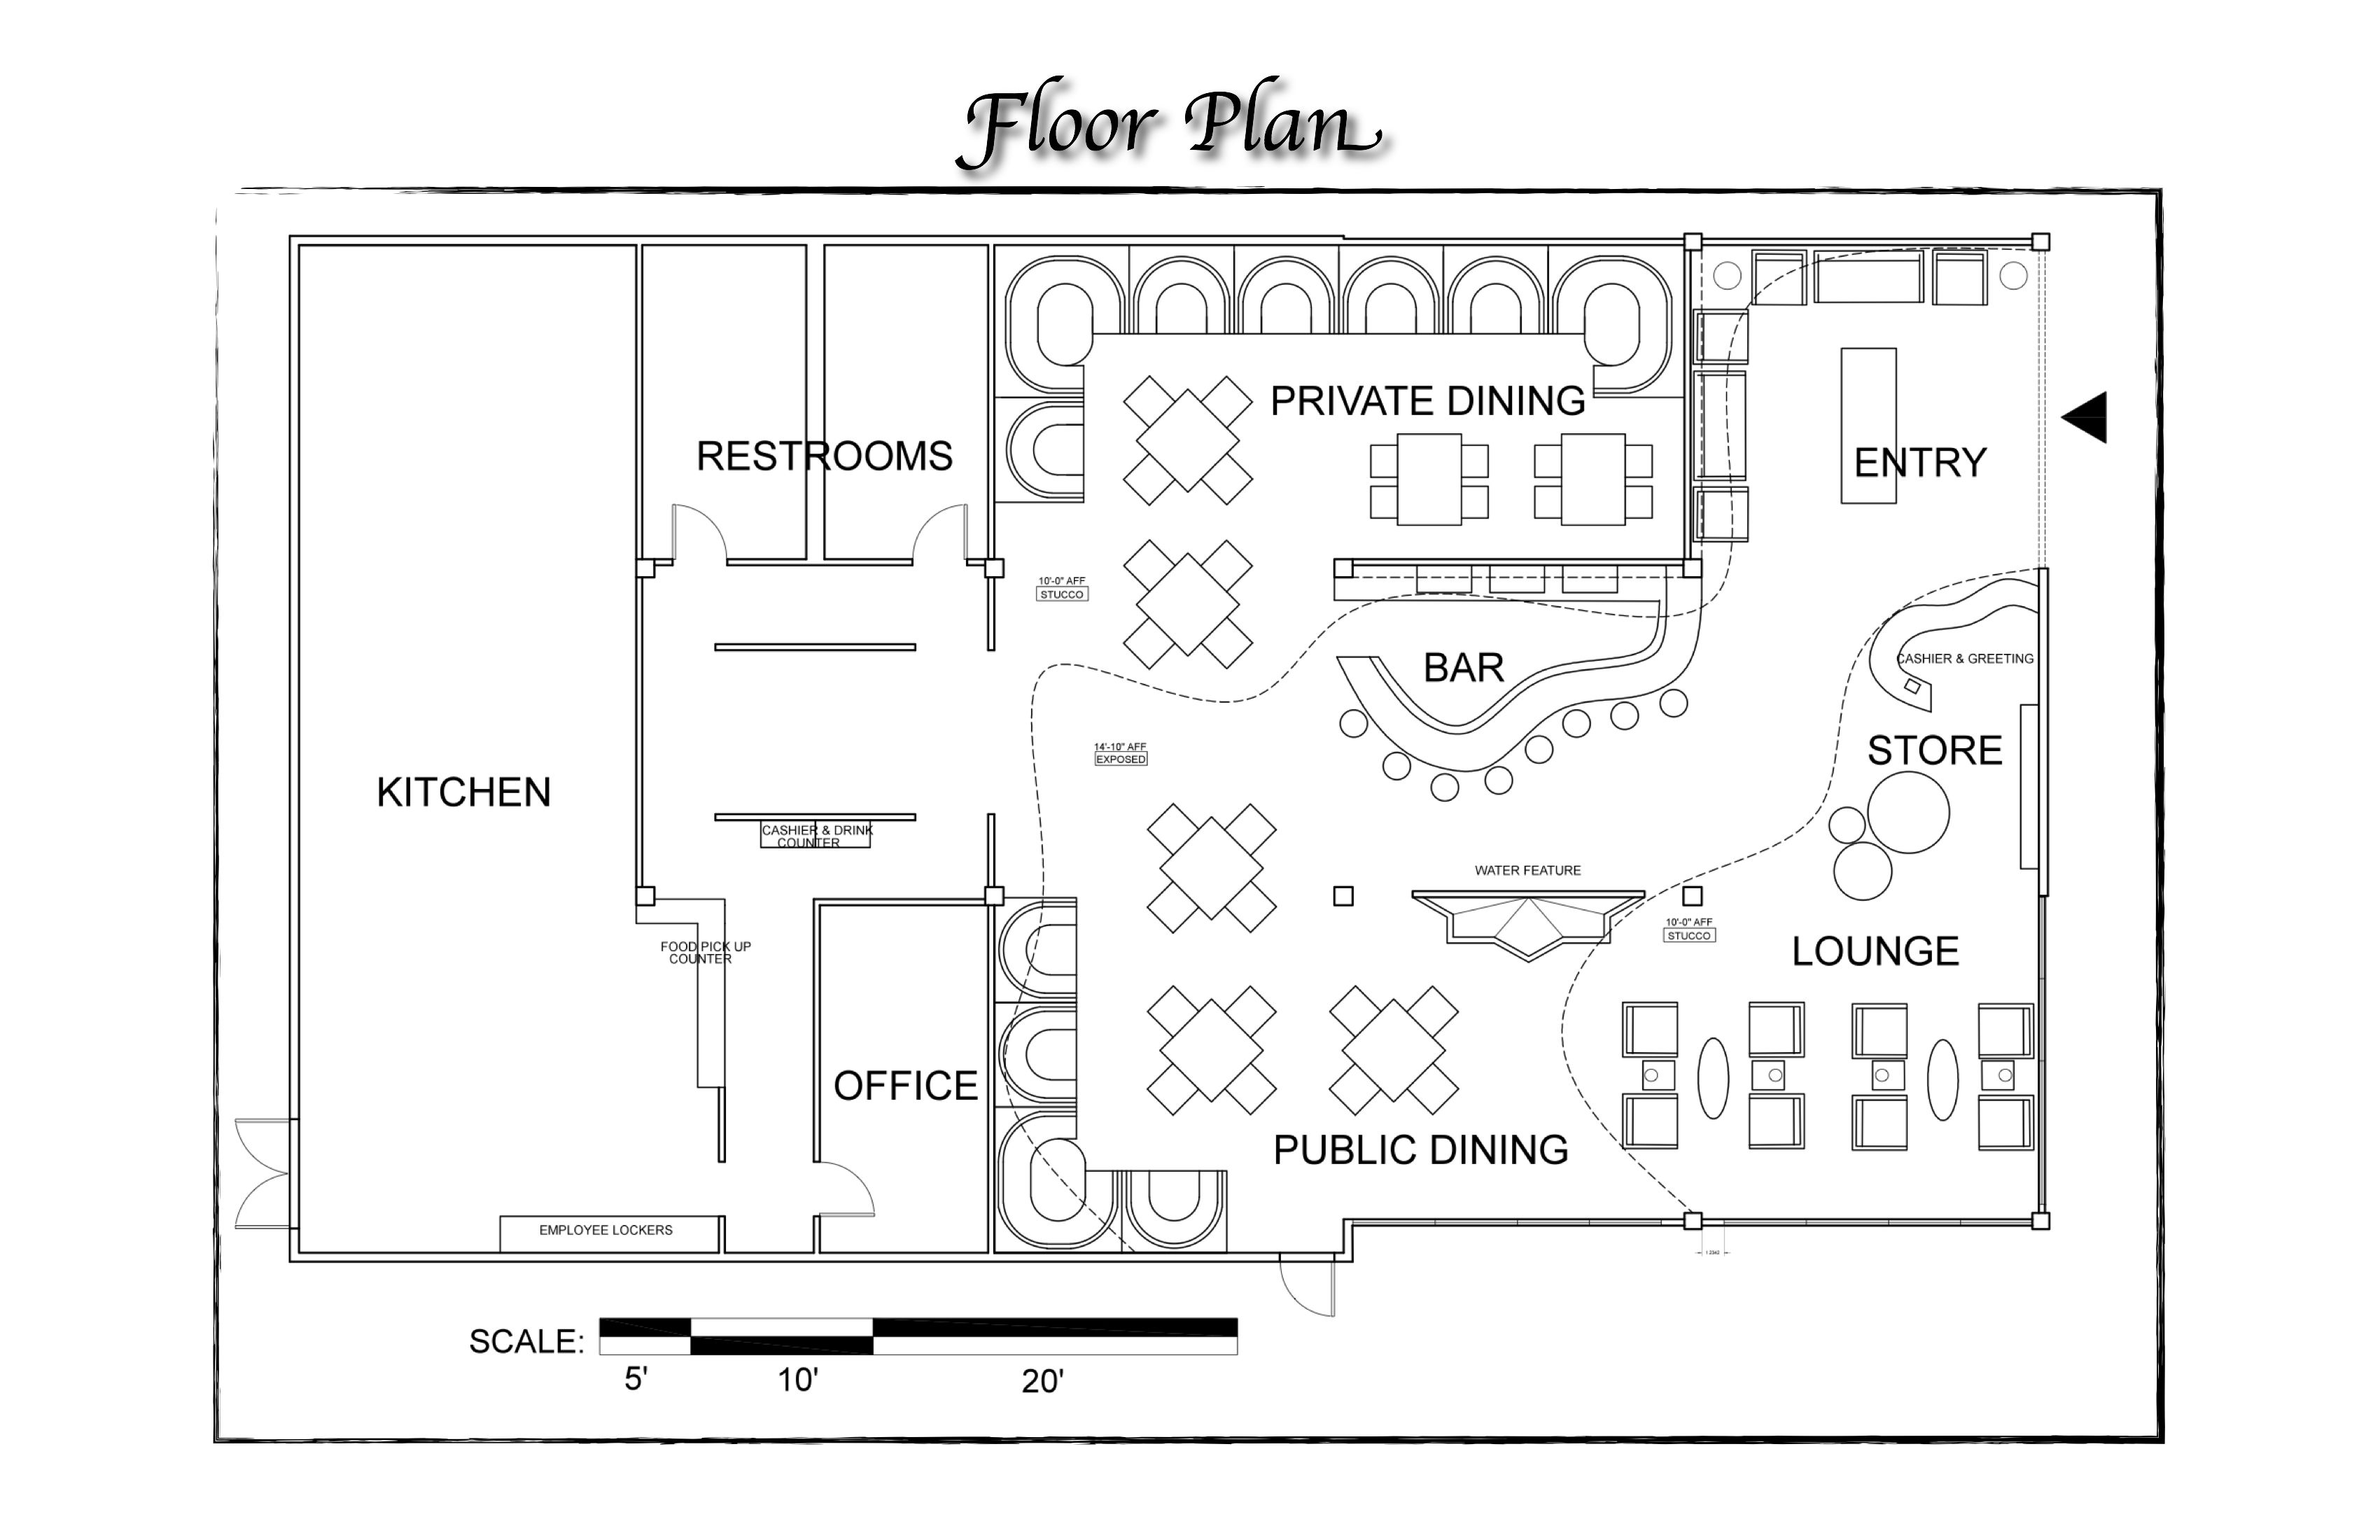 Restaurant Floor Plans Feed Kitchens Restaurant floor